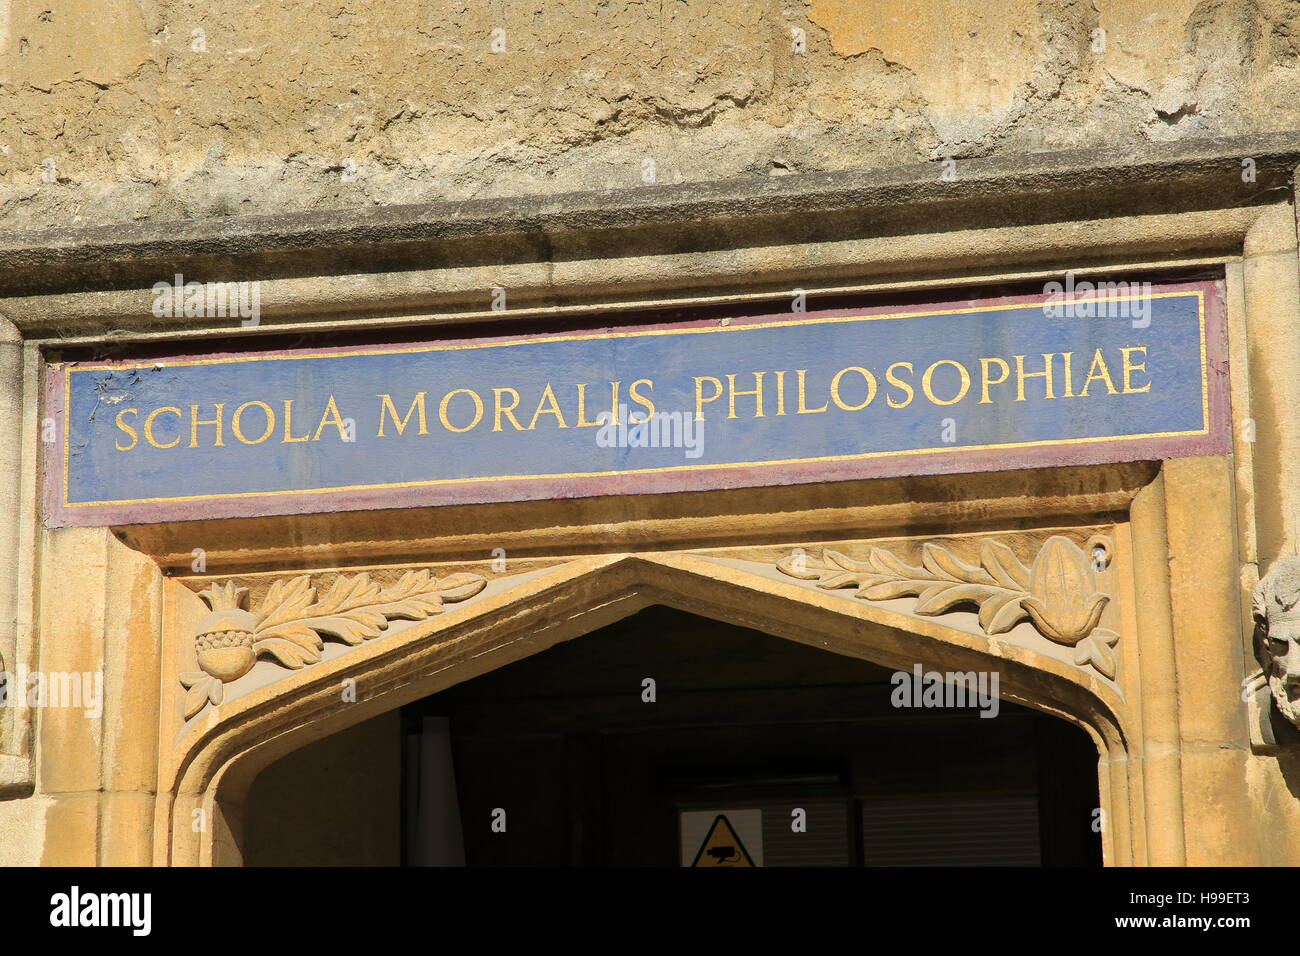 School for Moral Philosophy Latin, 'Schola Moralis Philosophiae', Bodleian Library University of Oxford, England, UK Stock Photo